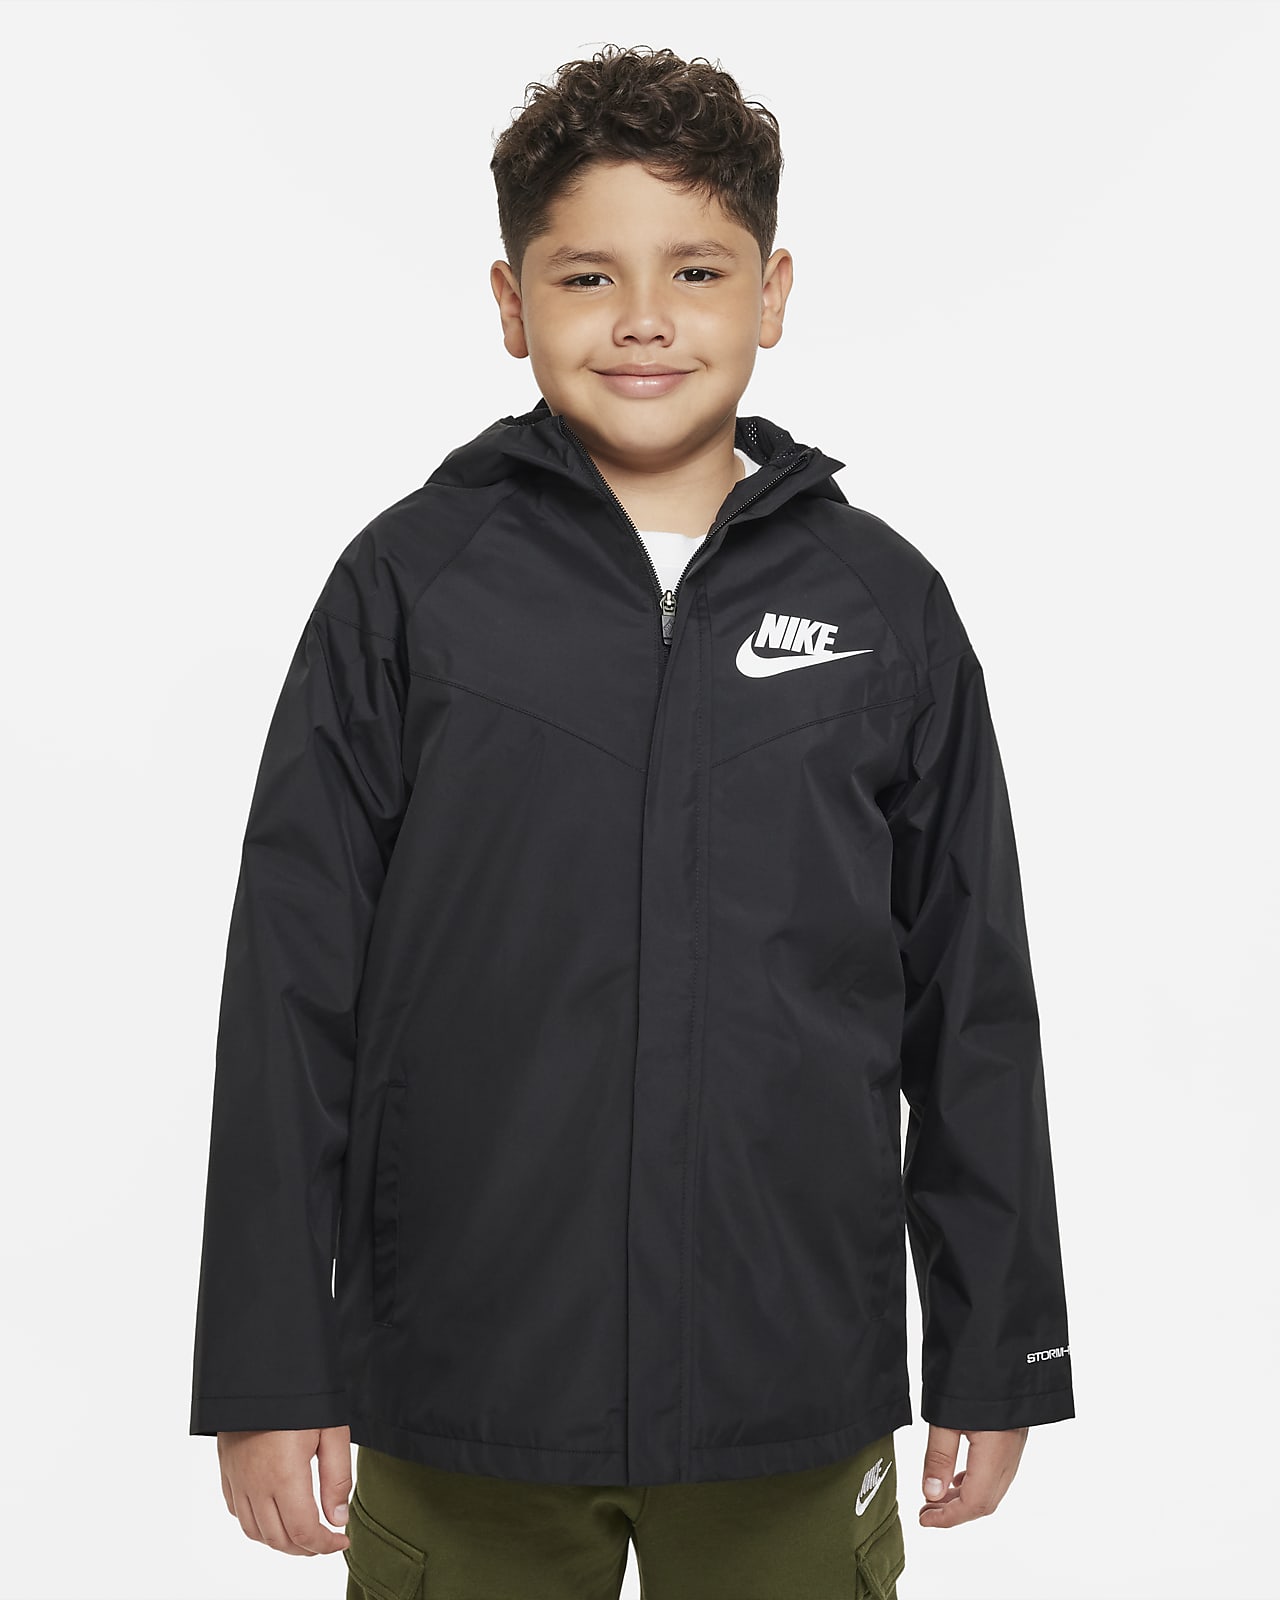 Nike Sportswear Storm-FIT Windrunner Jacke für ältere Kinder (Jungen) (große Größe)